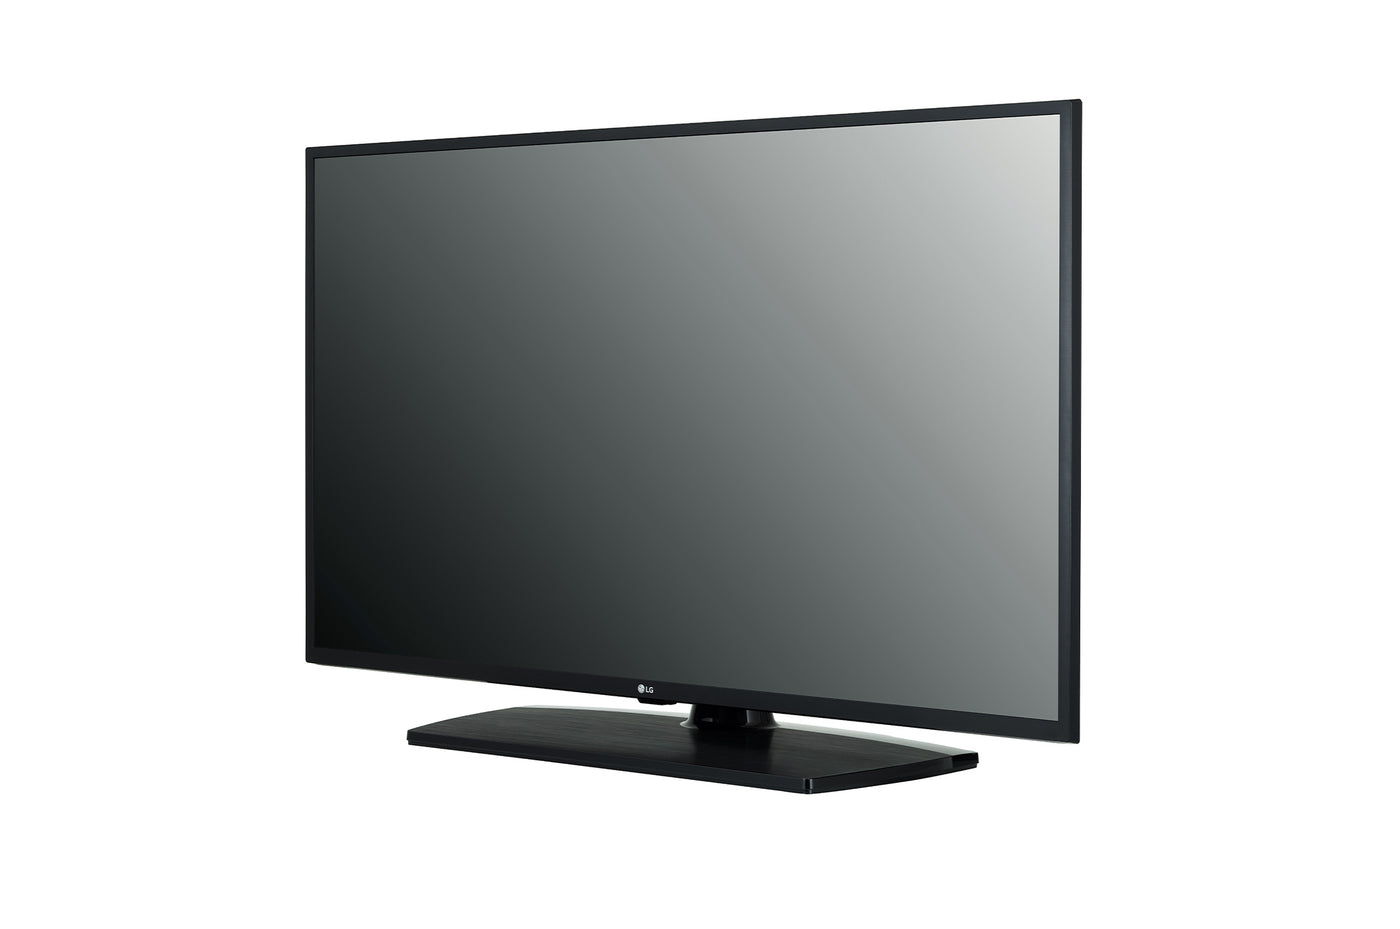 LG 55UM670H9 55" Pro:Centric Smart Hospitality 4K UHD TV with Slim Depth and Pro:Idiom Direct